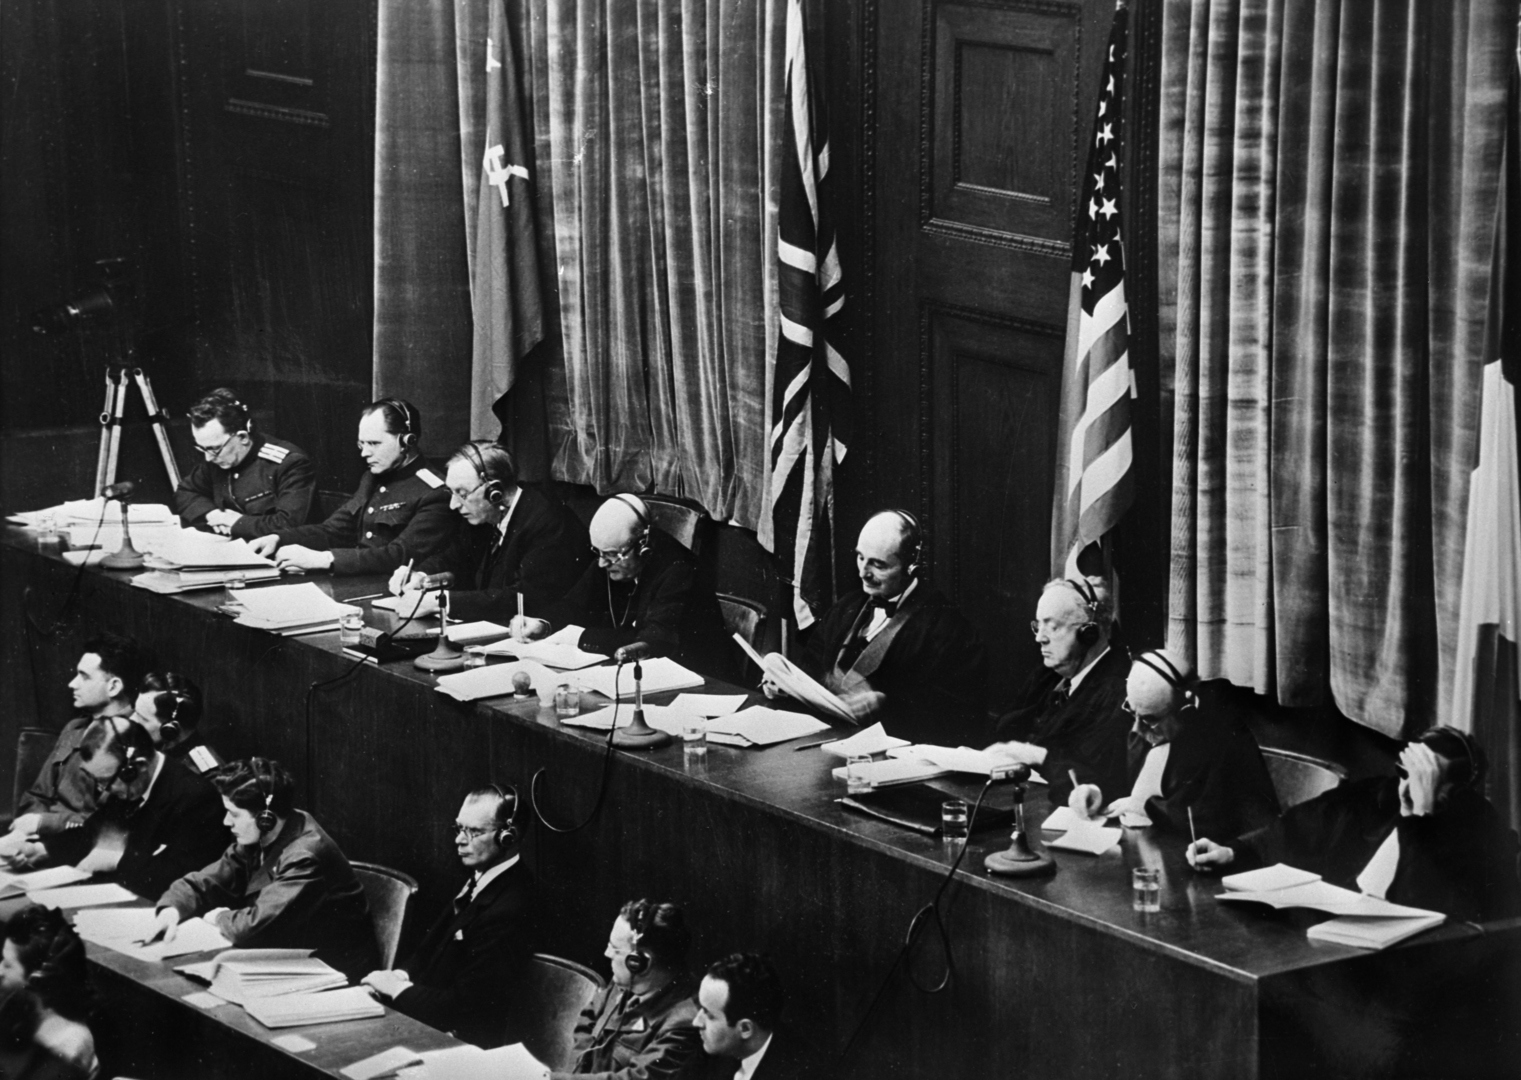 "Gericht der Völker": Vor 75 Jahren begann das Nürnberger Tribunal